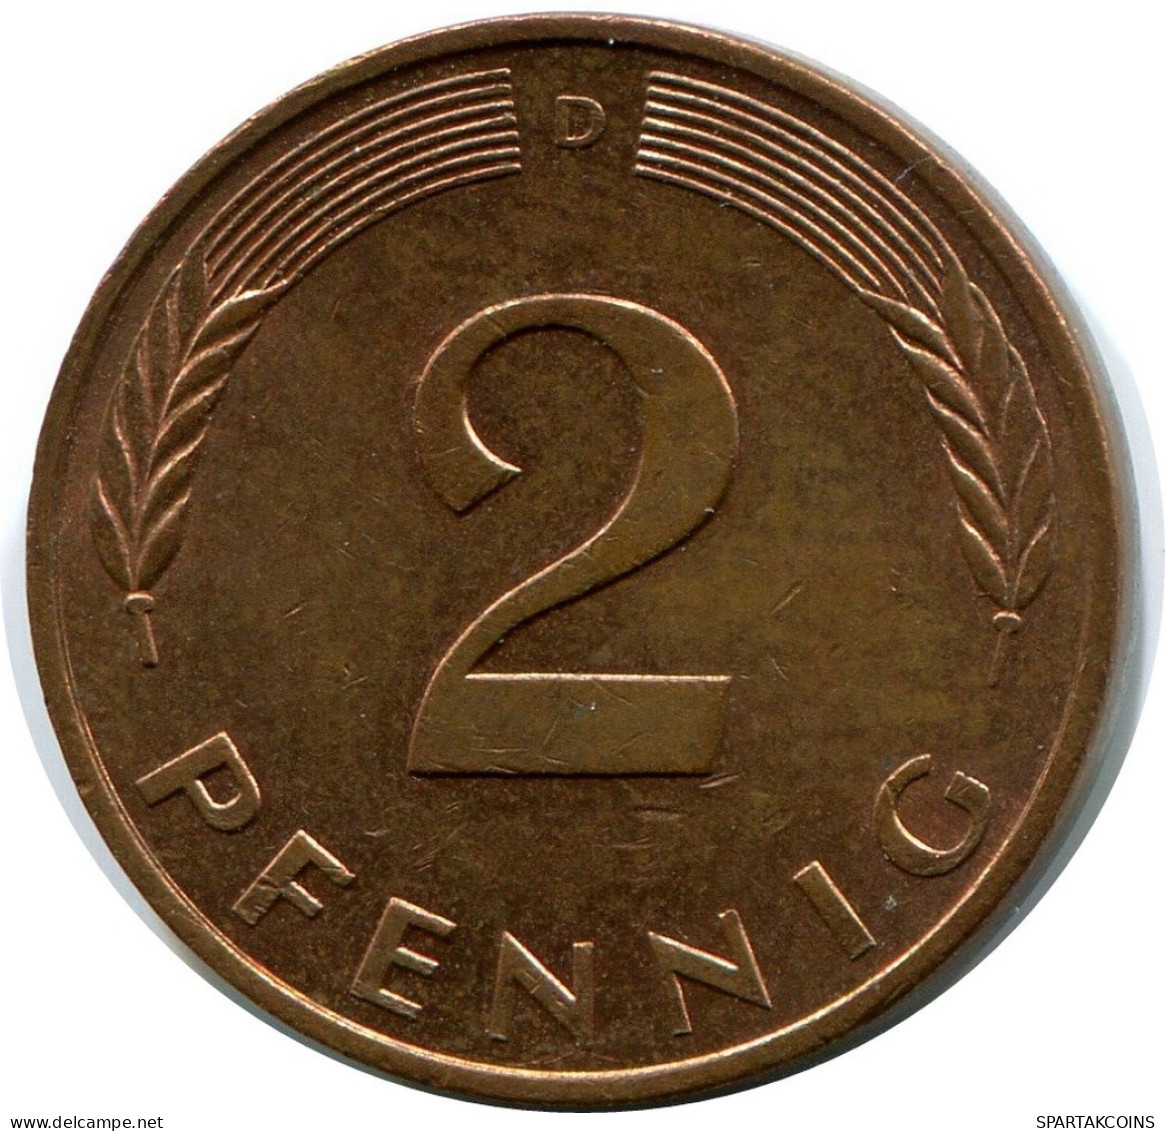 2 PFENNIG 1991 D BRD ALEMANIA Moneda GERMANY #AZ476.E.A - 2 Pfennig